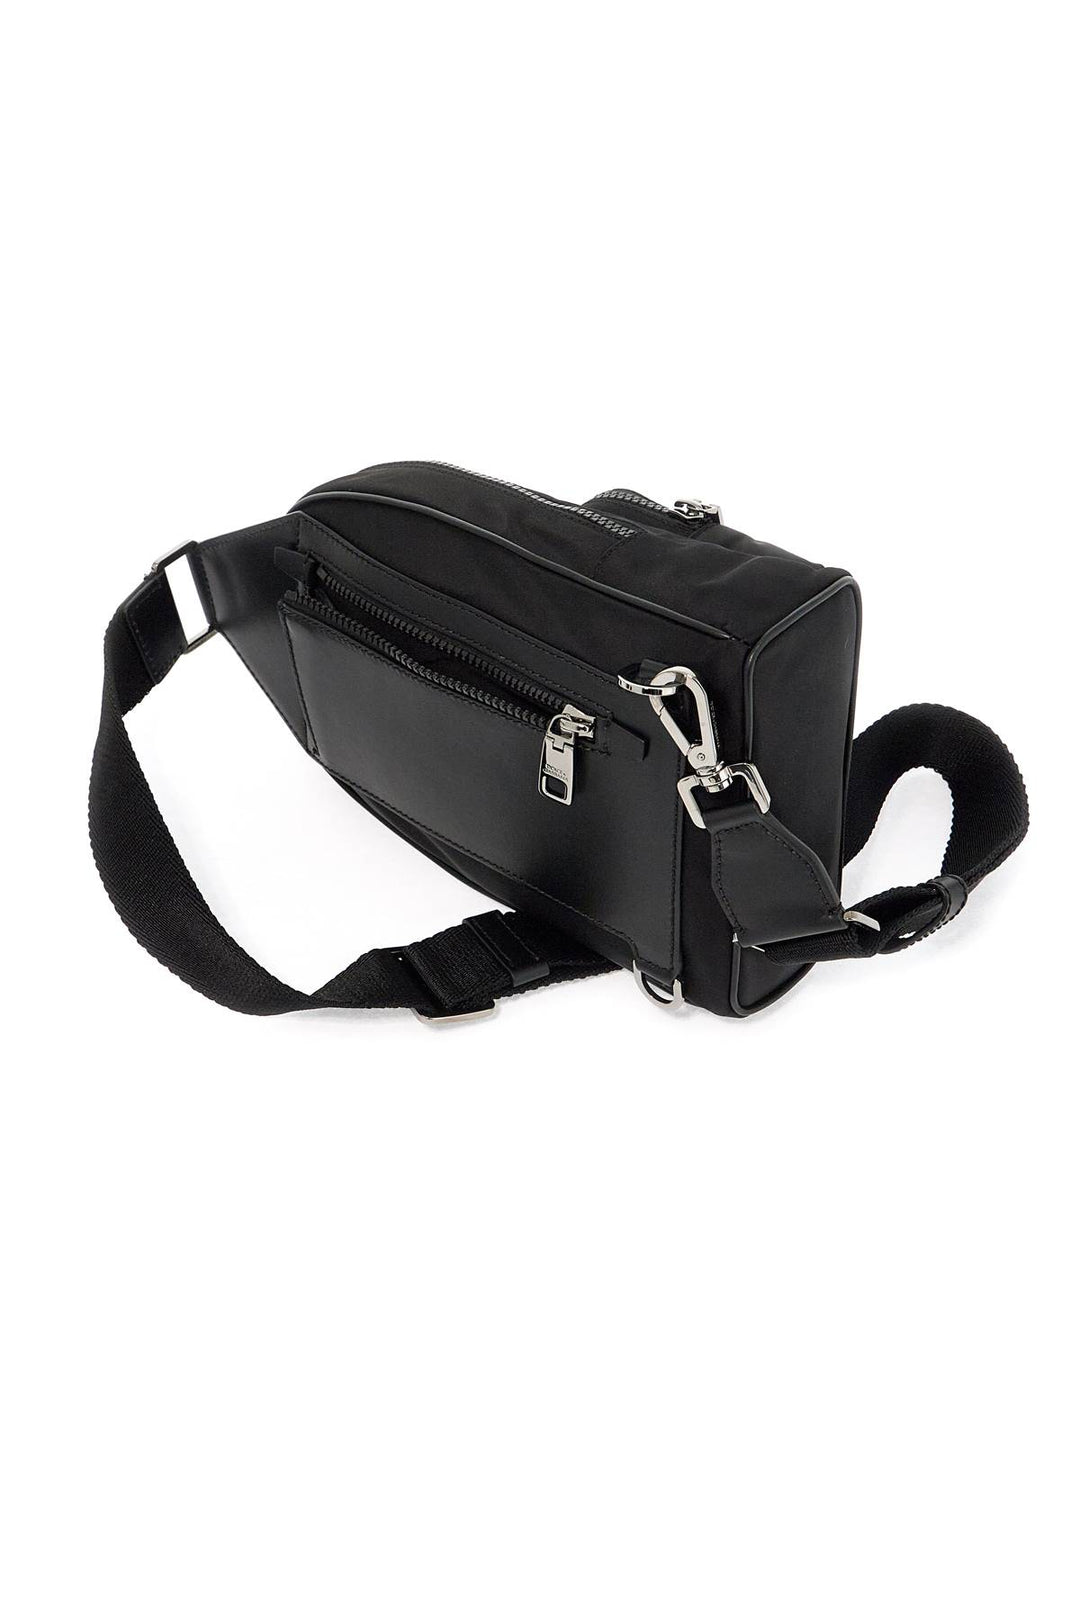 Dolce & Gabbana Nylon Shoulder Bag With Crossbody   Black